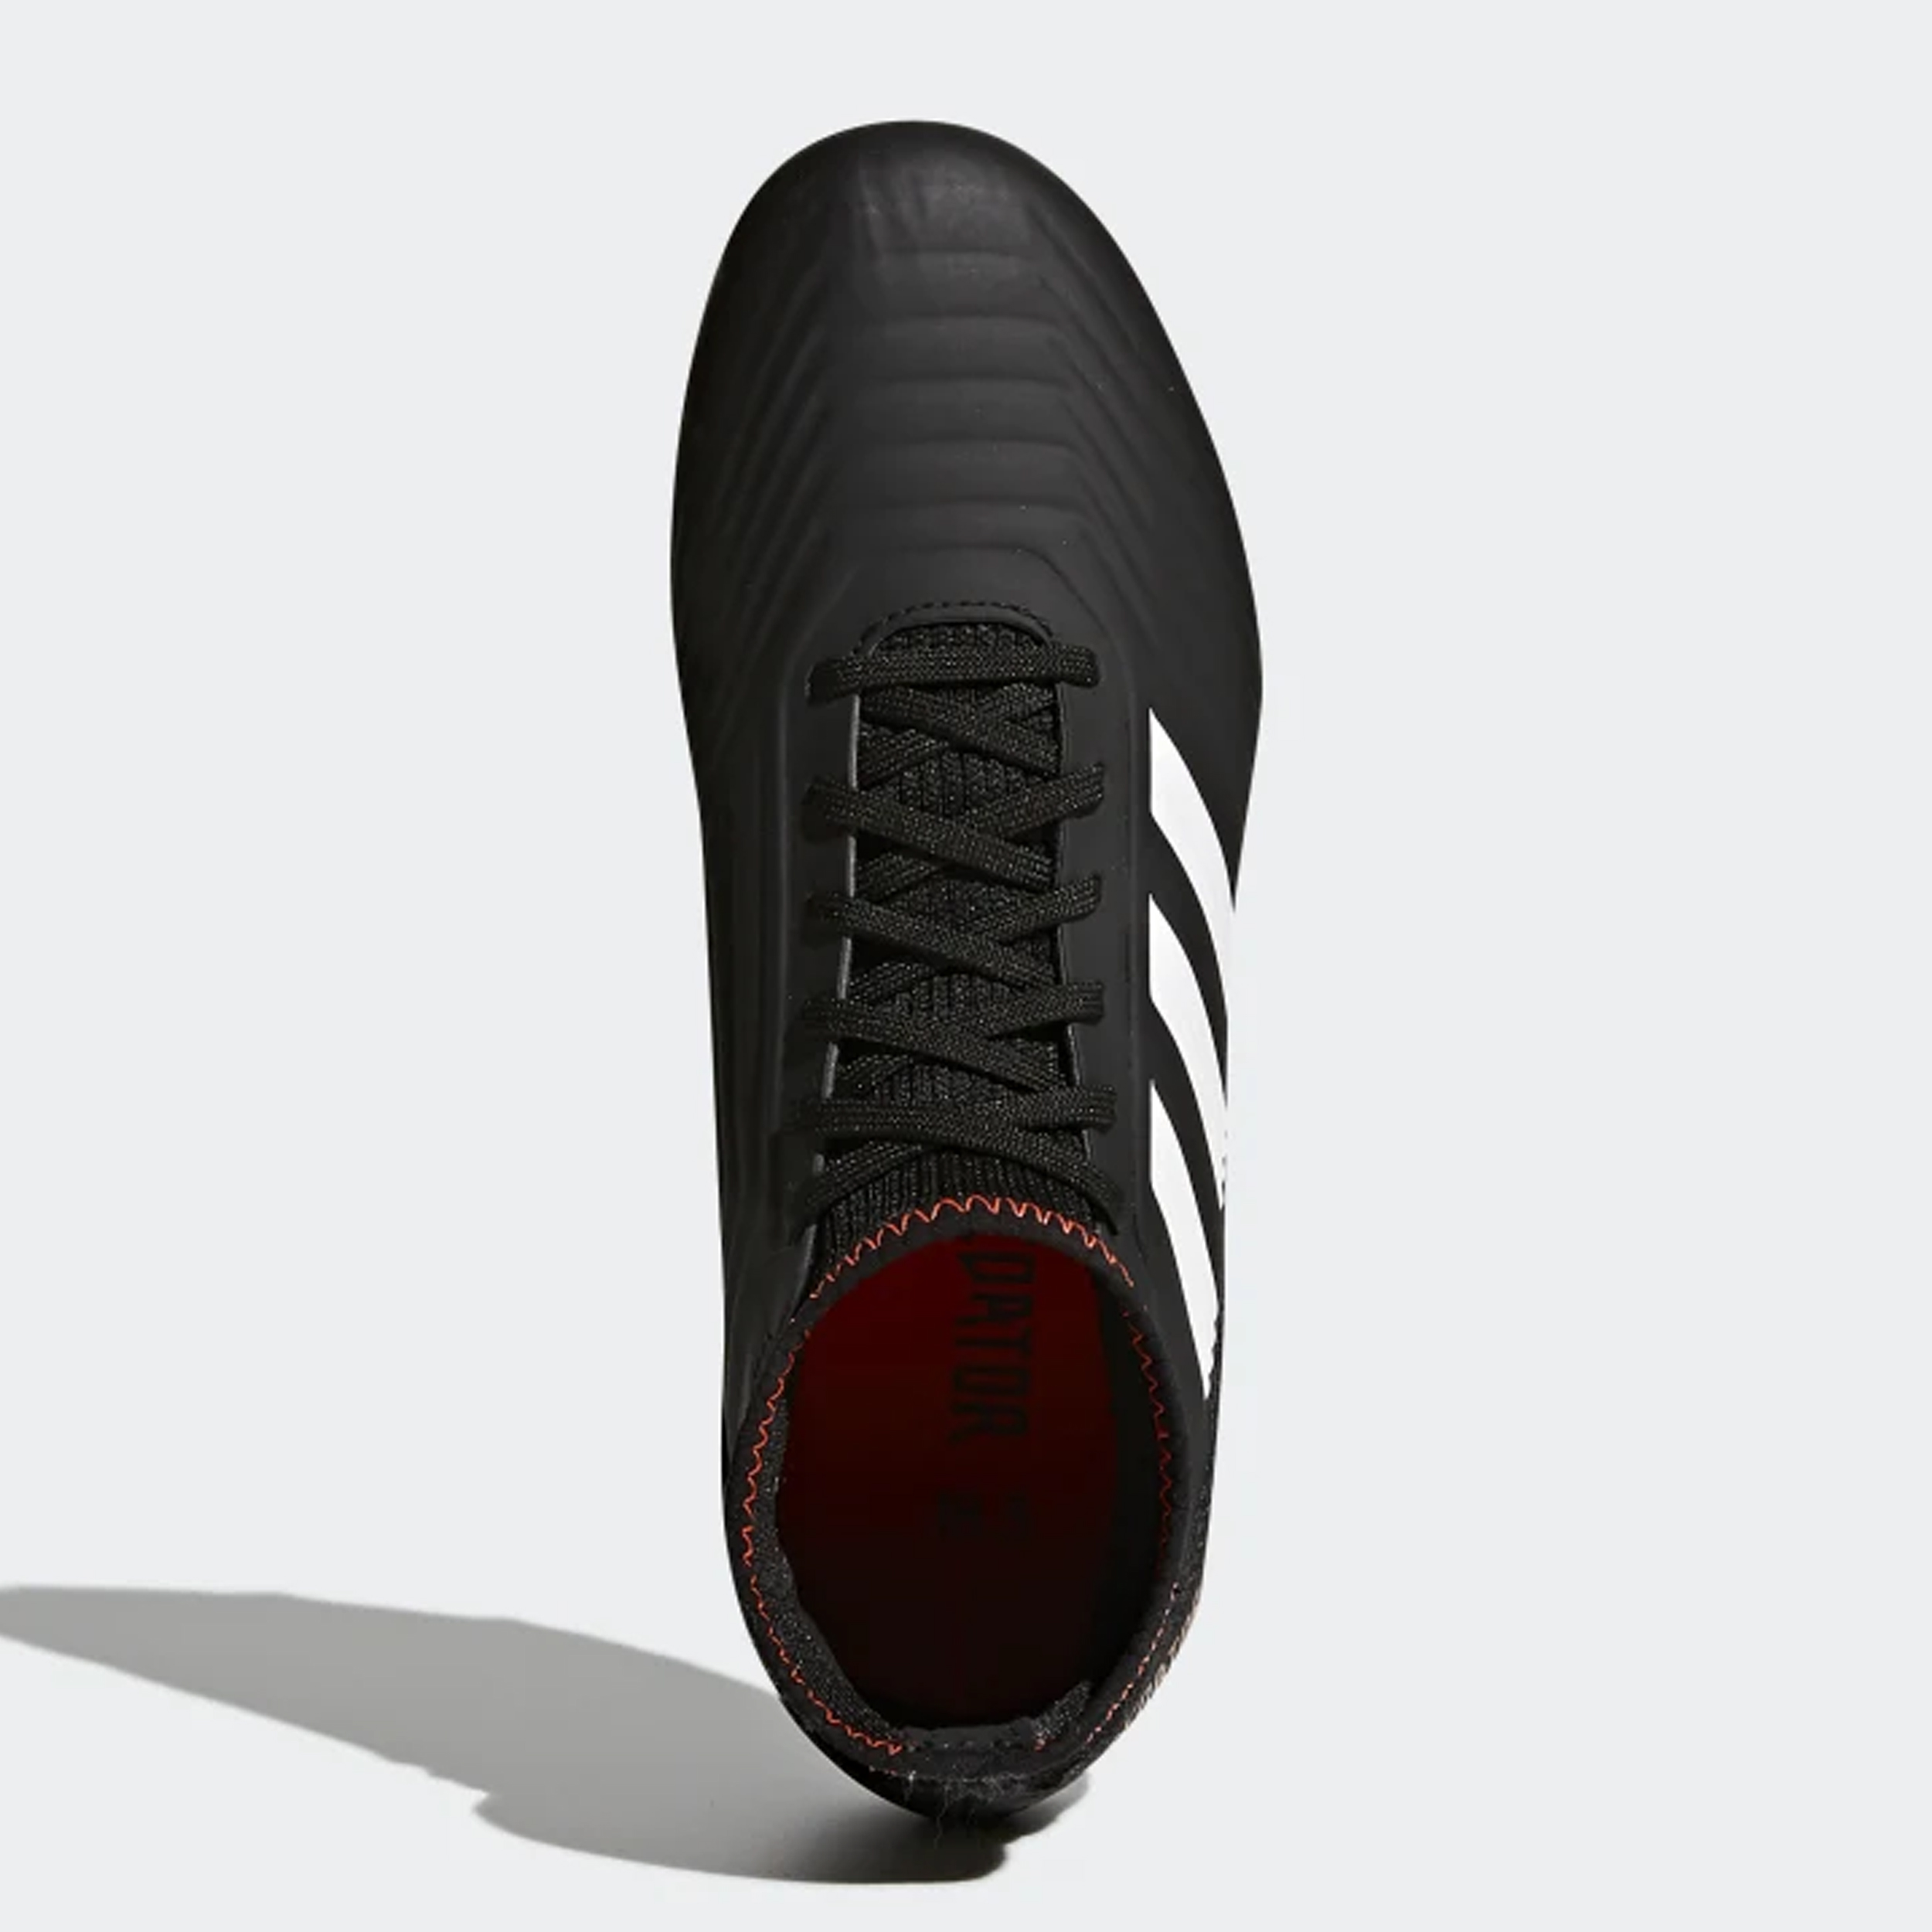 کفش مخصوص فوتبال پسرانه آدیداس سری PREDATOR 18.3 مدل CP9010